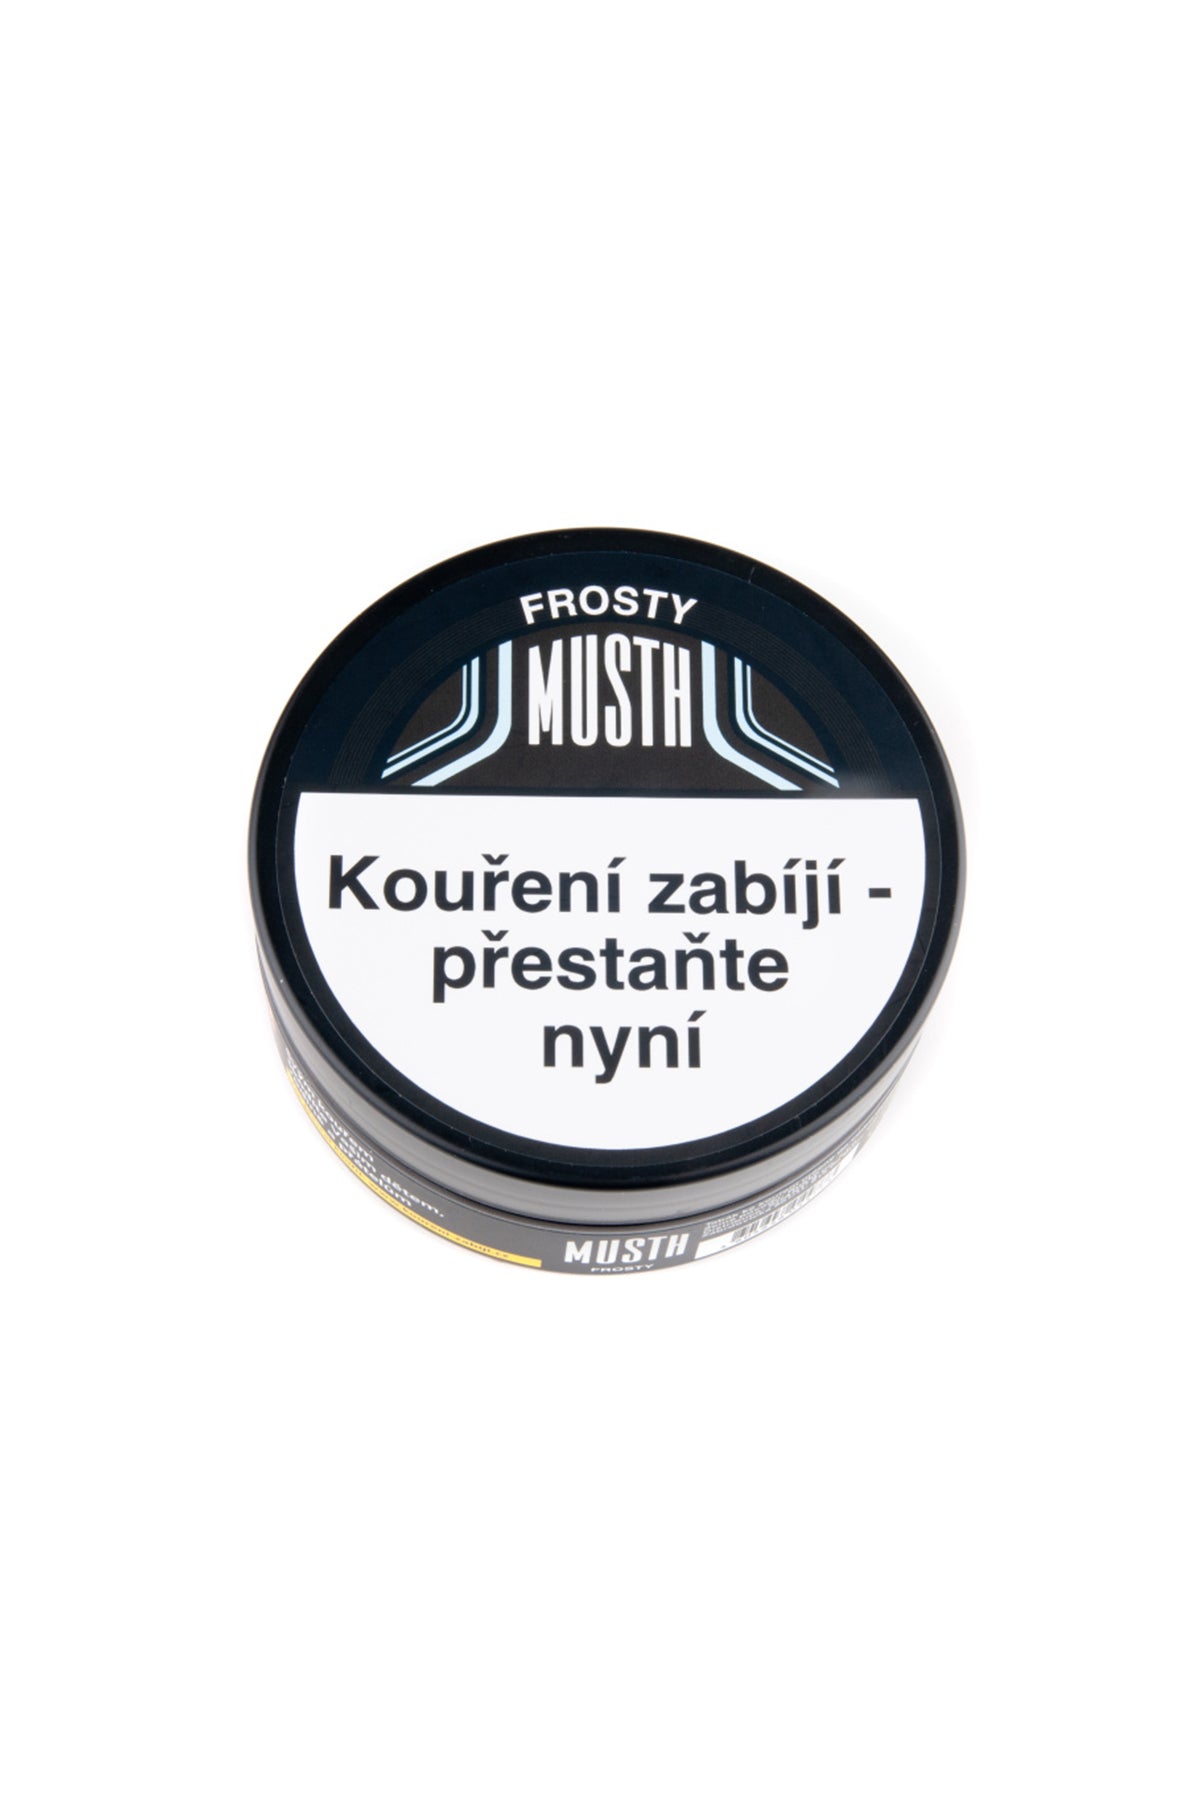 Tabák - MustH 125g - Frosty